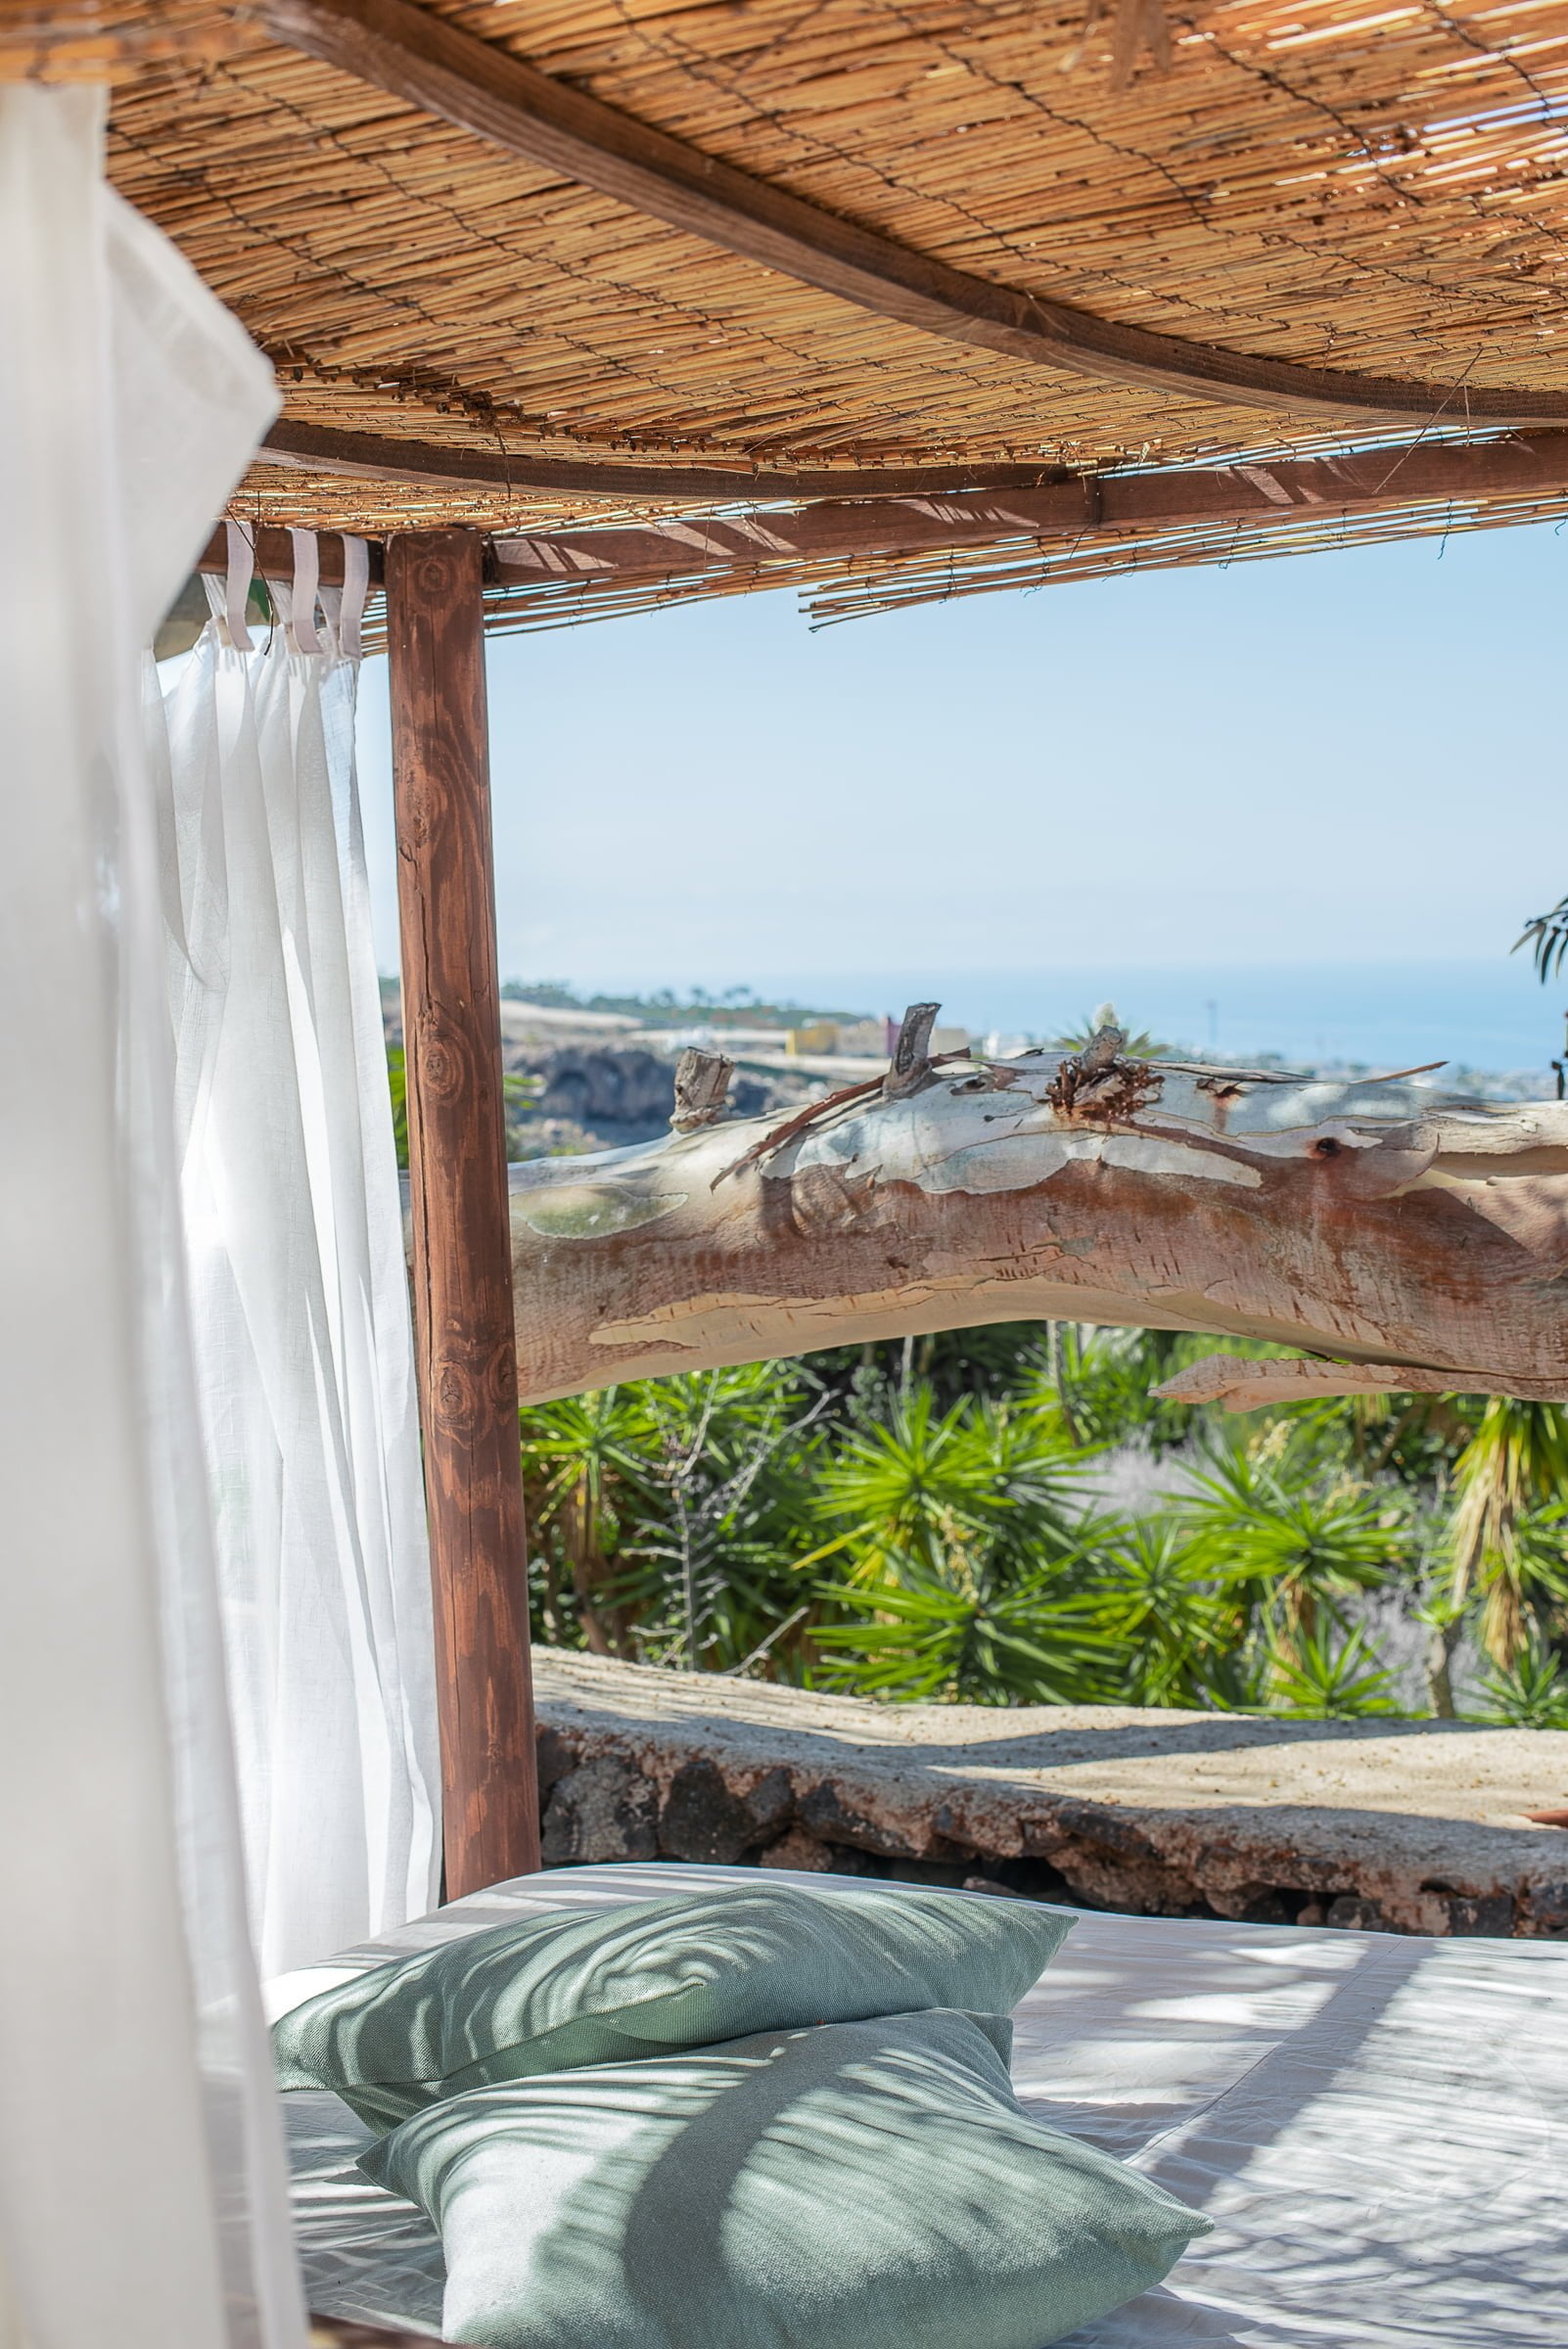 Tropical 3 apartment - Luxury accommodation on Tenerife